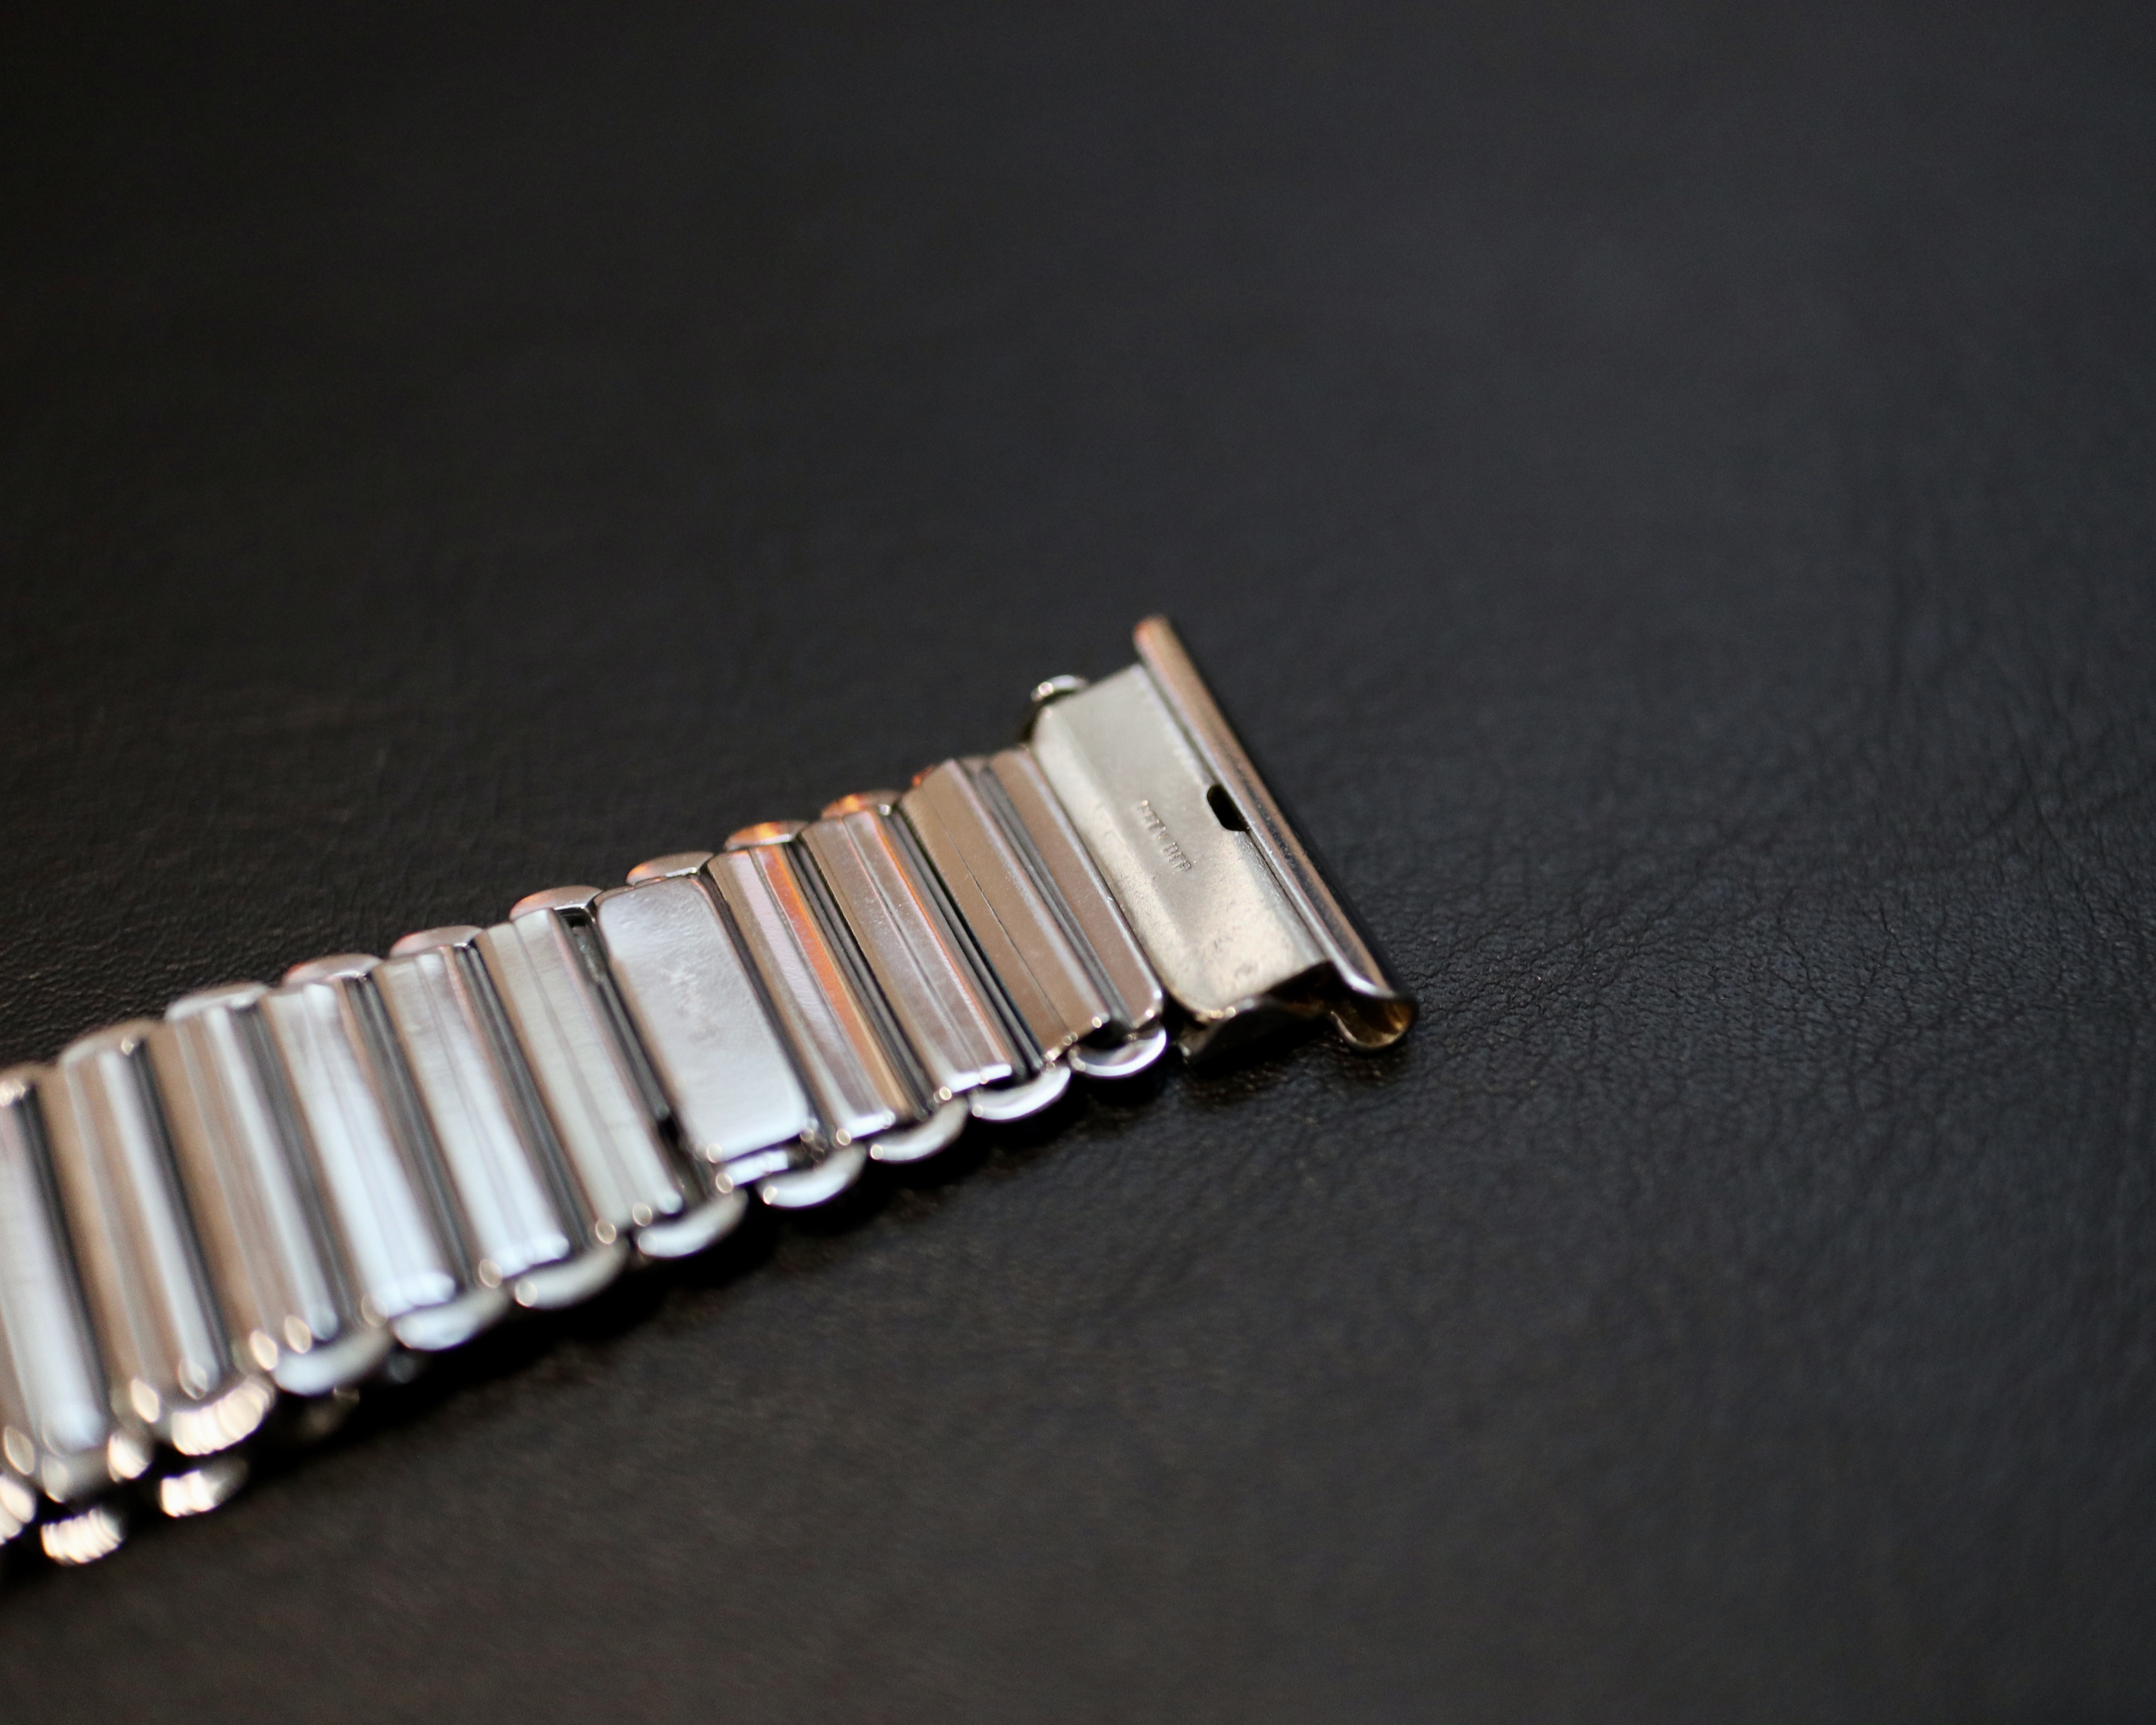 【ZRC】Bamboo Vintage Bracelet NOS 22mm用 タグ付き画像